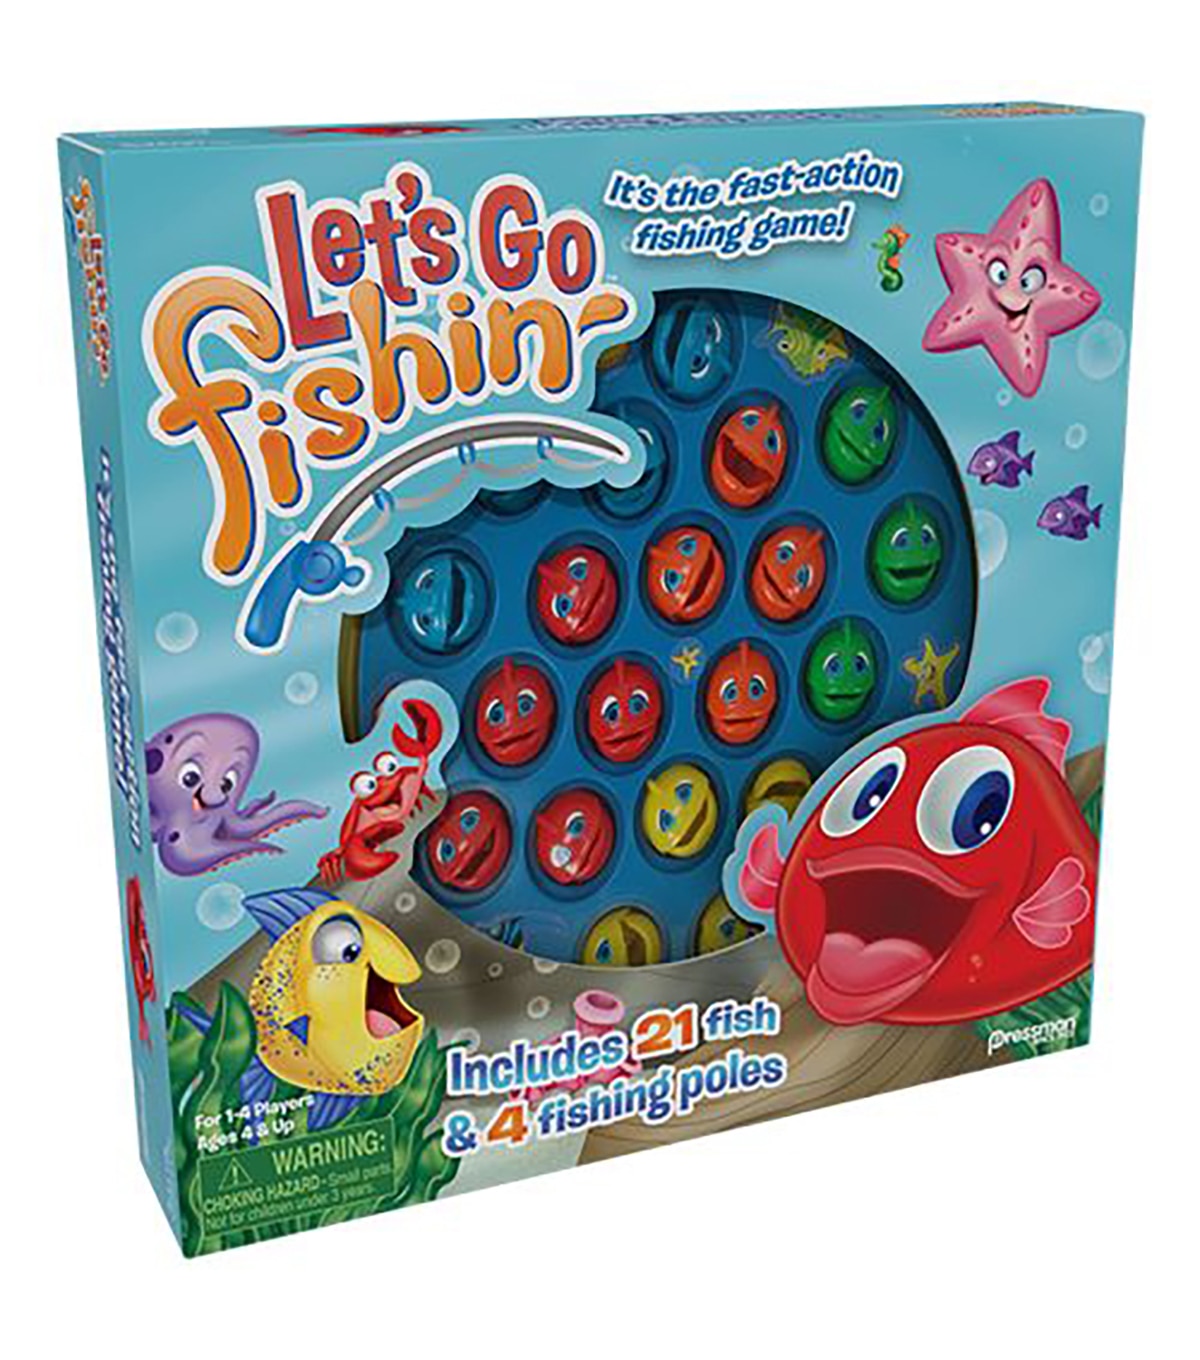 Let's Go Fishin' - ReviewNebula.com - The classic fishing game for